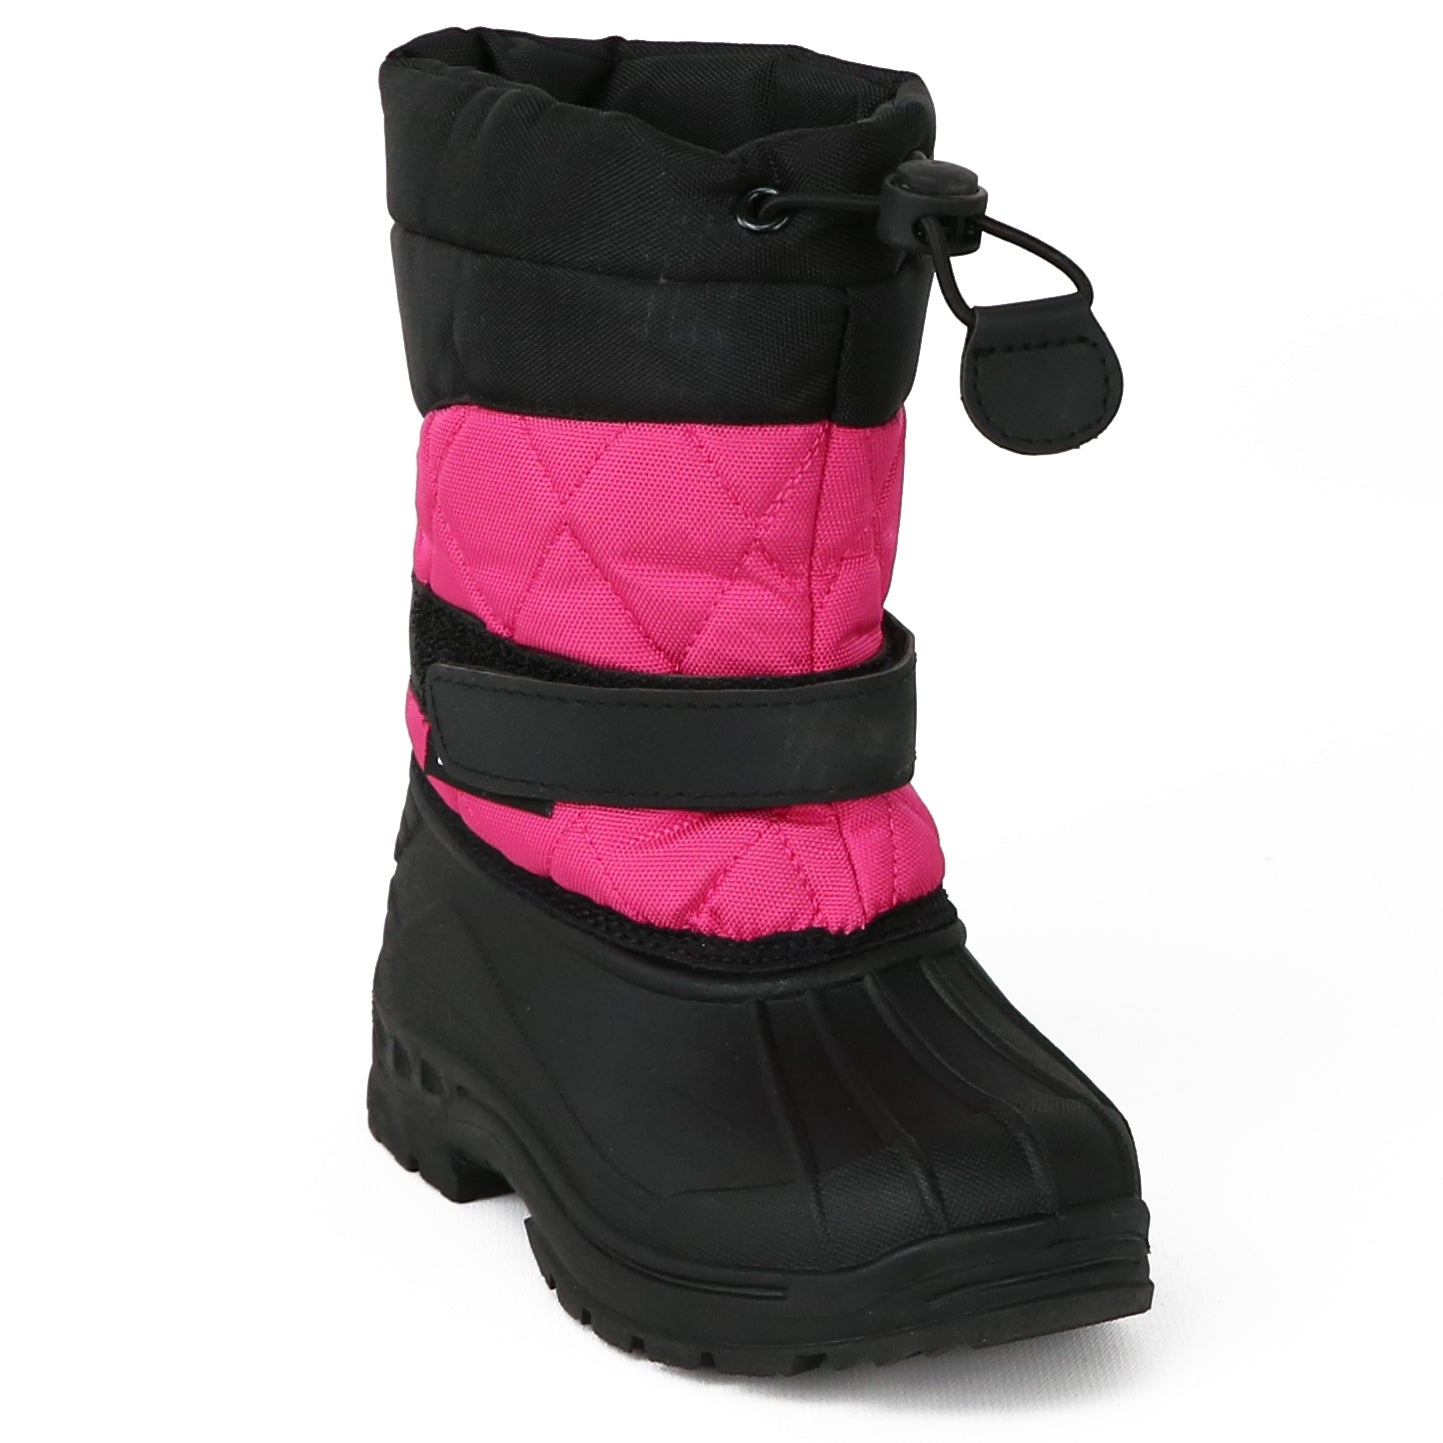 Snowkicks Toddler Boys and Girls 6-10 Weatherproof Snow Boots